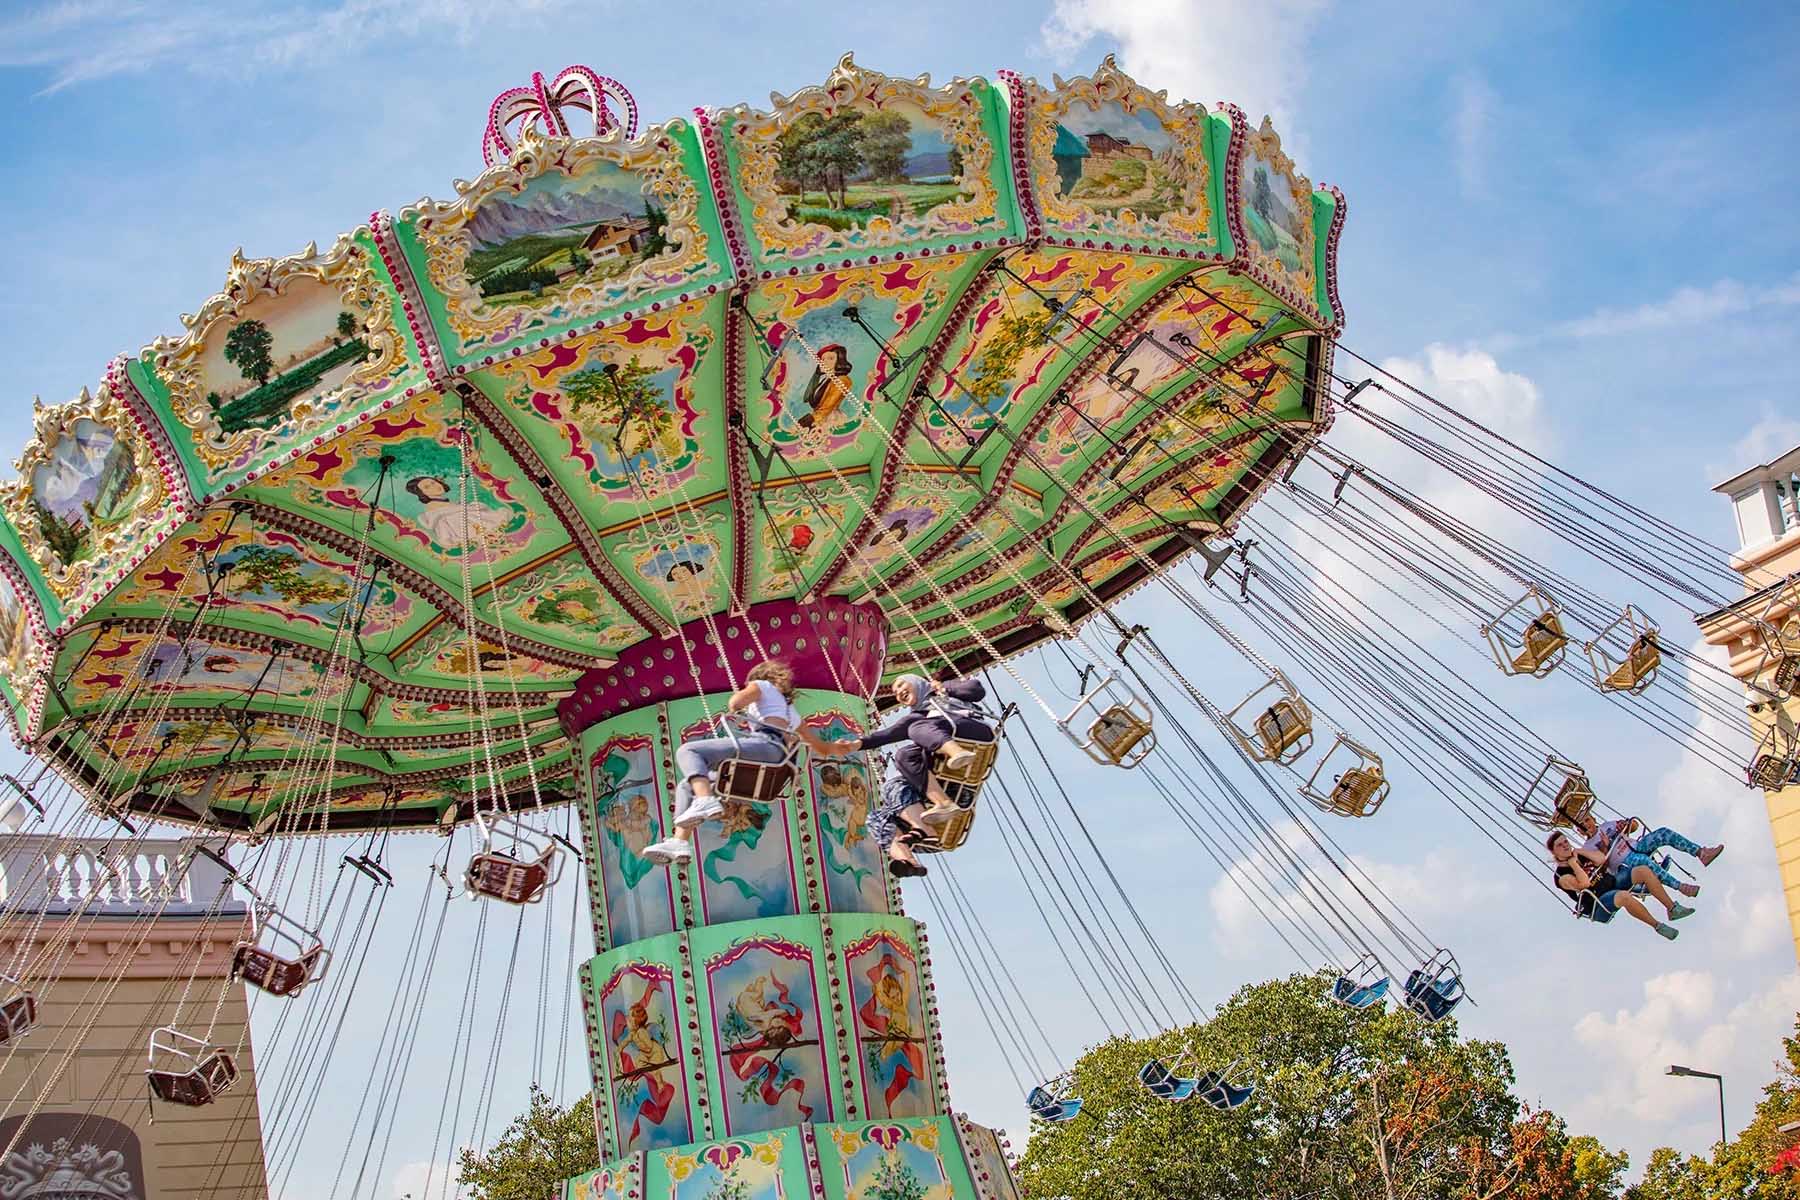 Carousel ride in Prater amusement park, Vienna